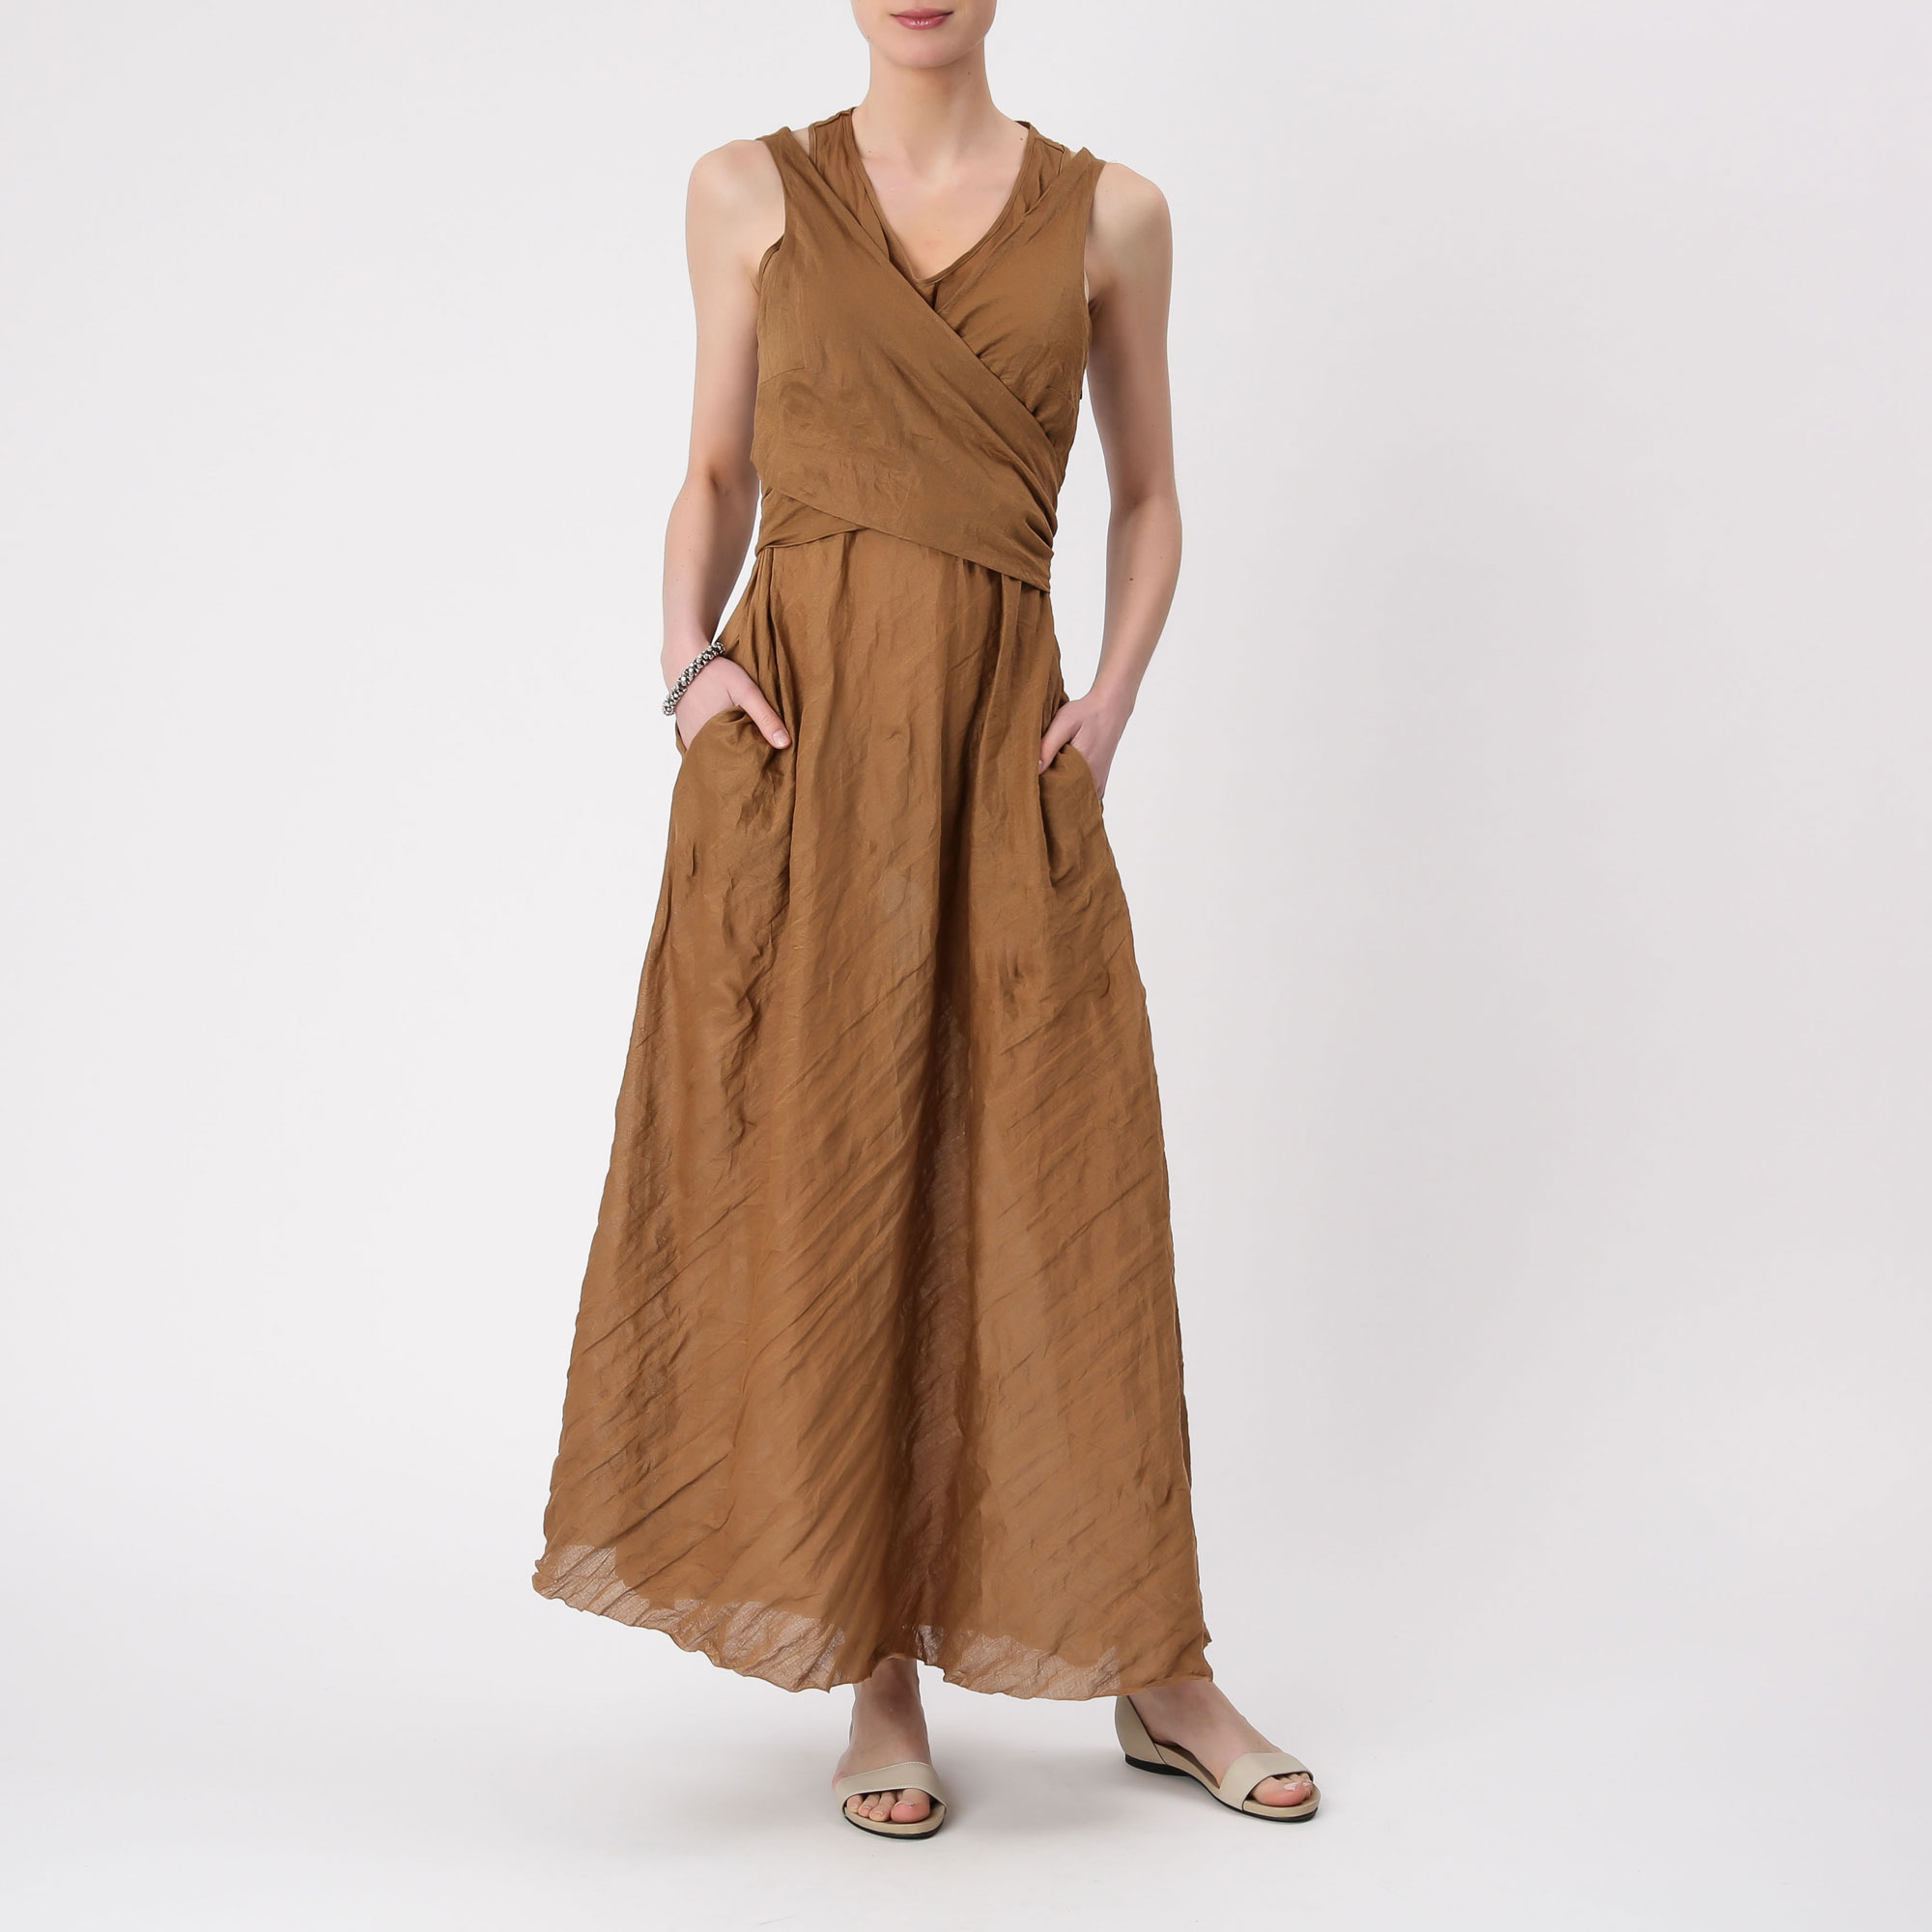 Orange maxi dress, wrap top style by Sarah Pacini